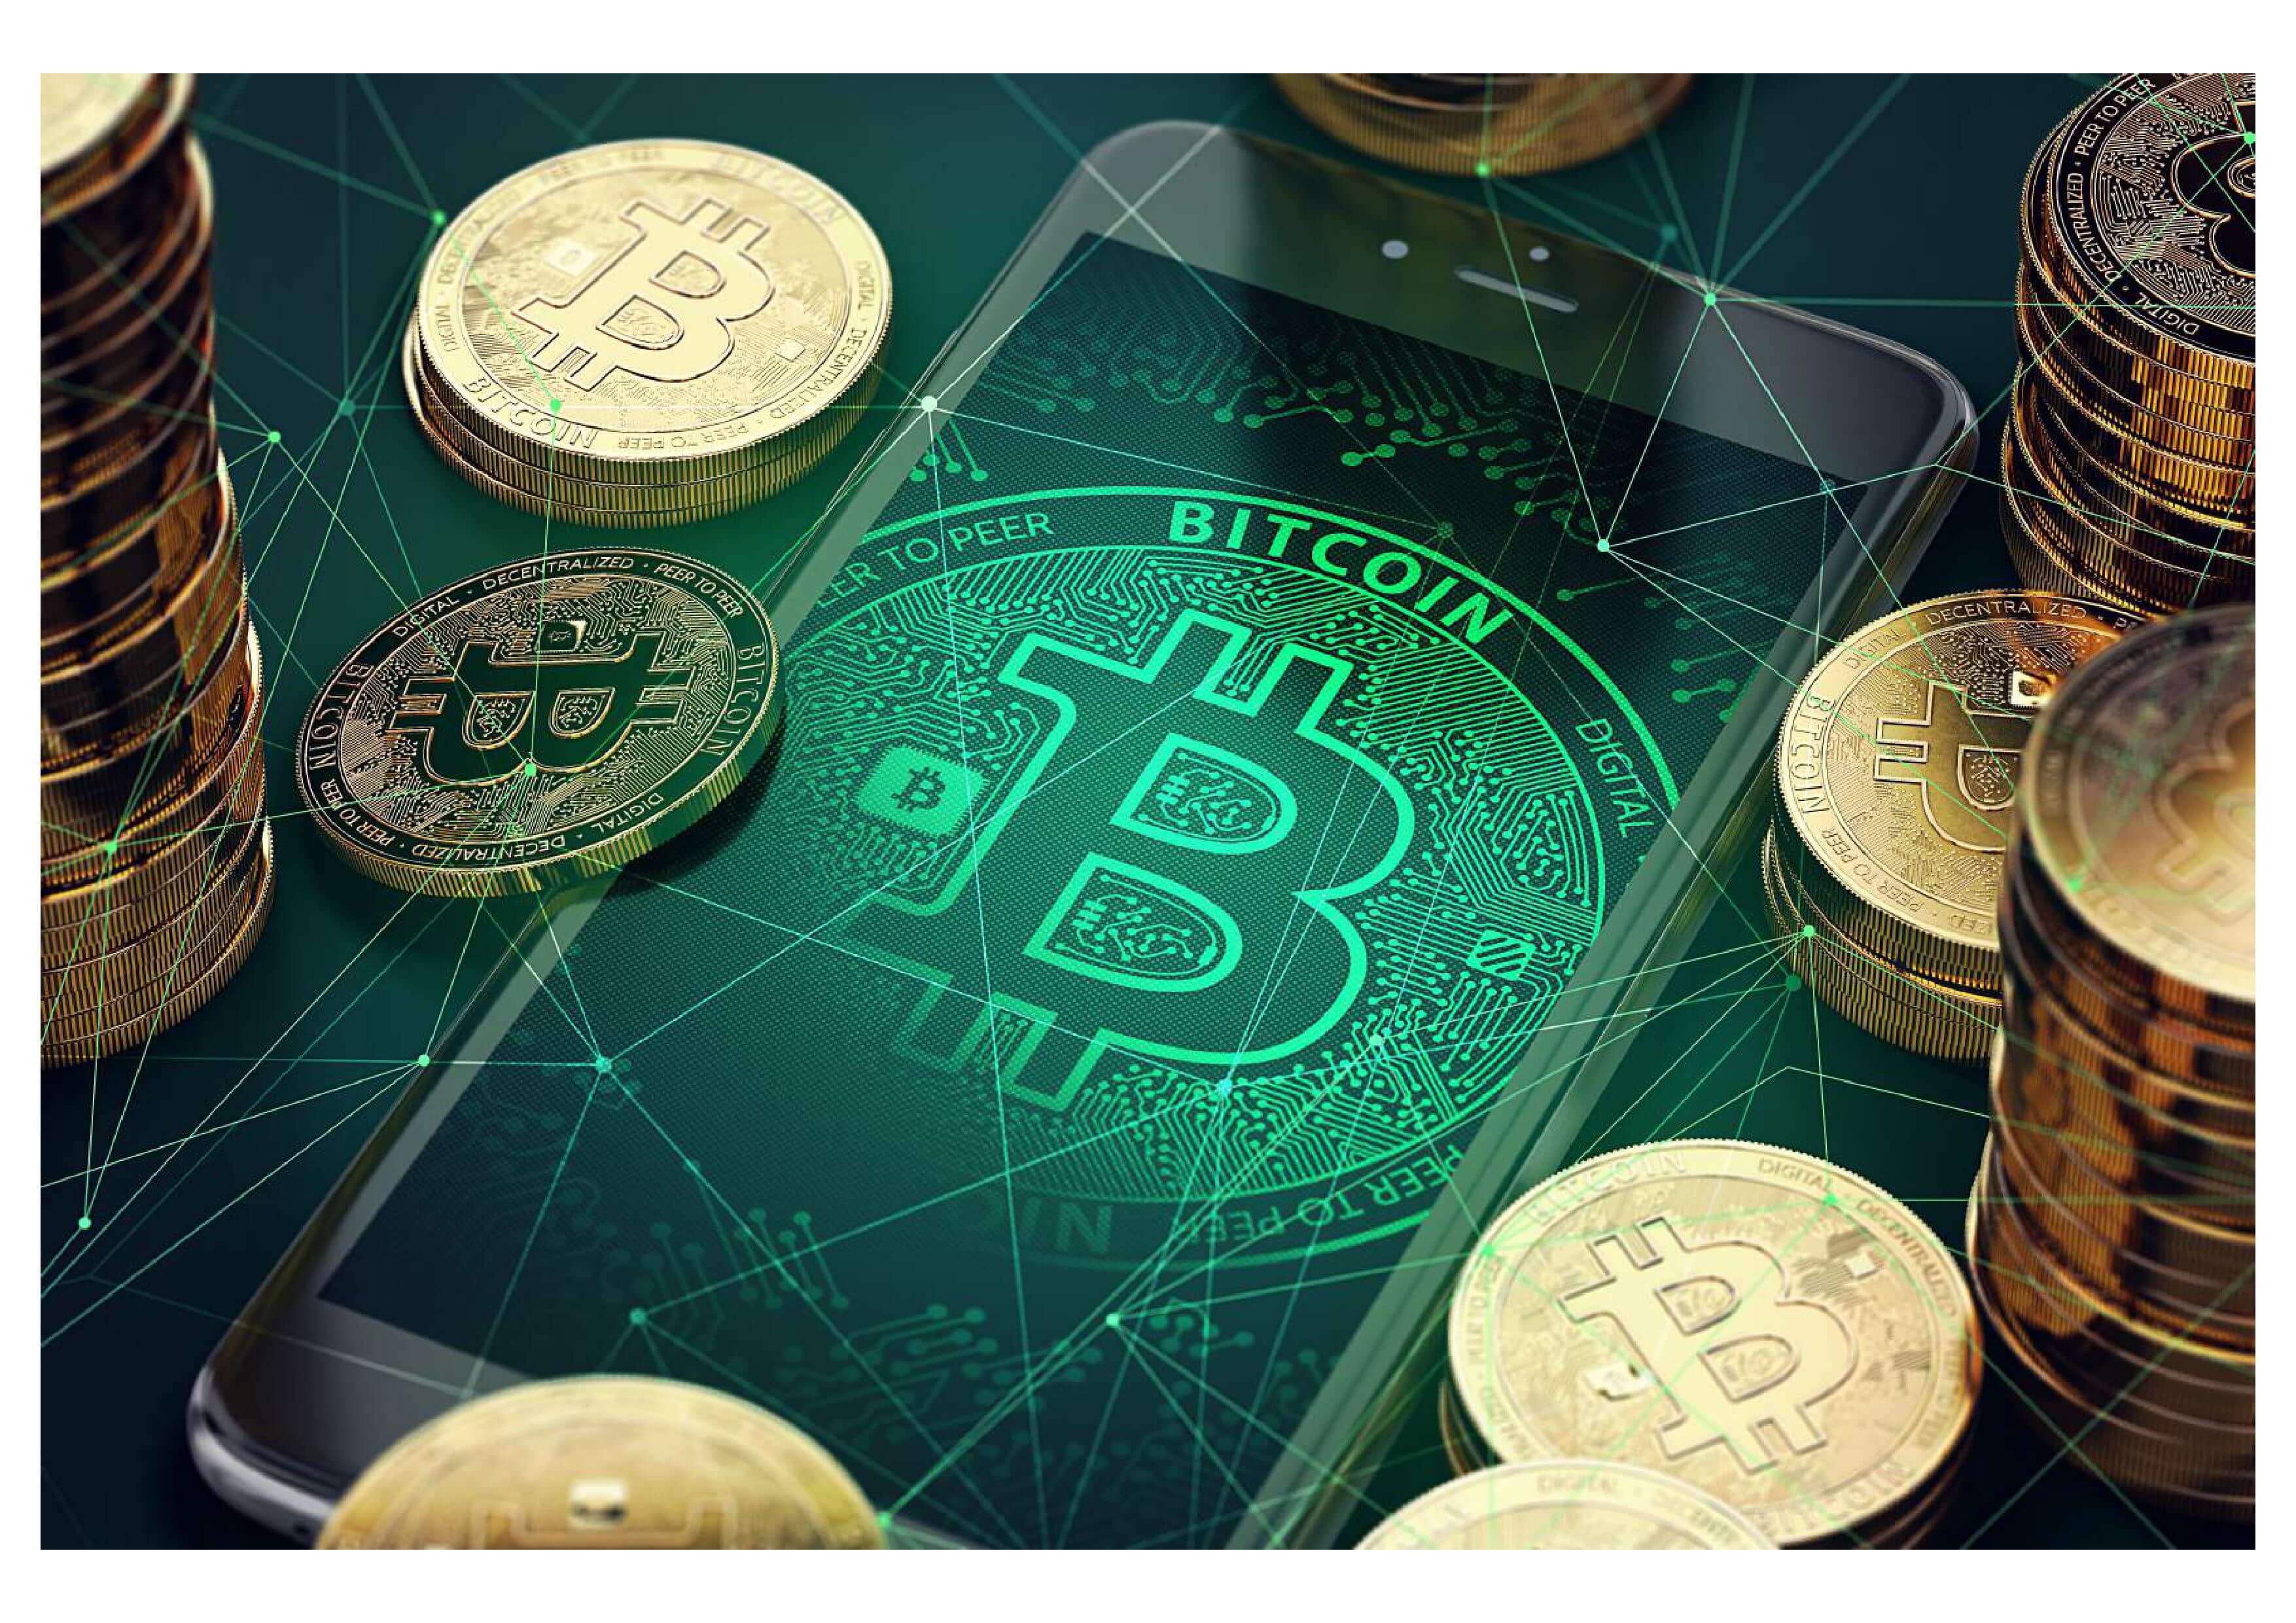 apa itu bitcoin dan bagaimana cara mendapatkannya